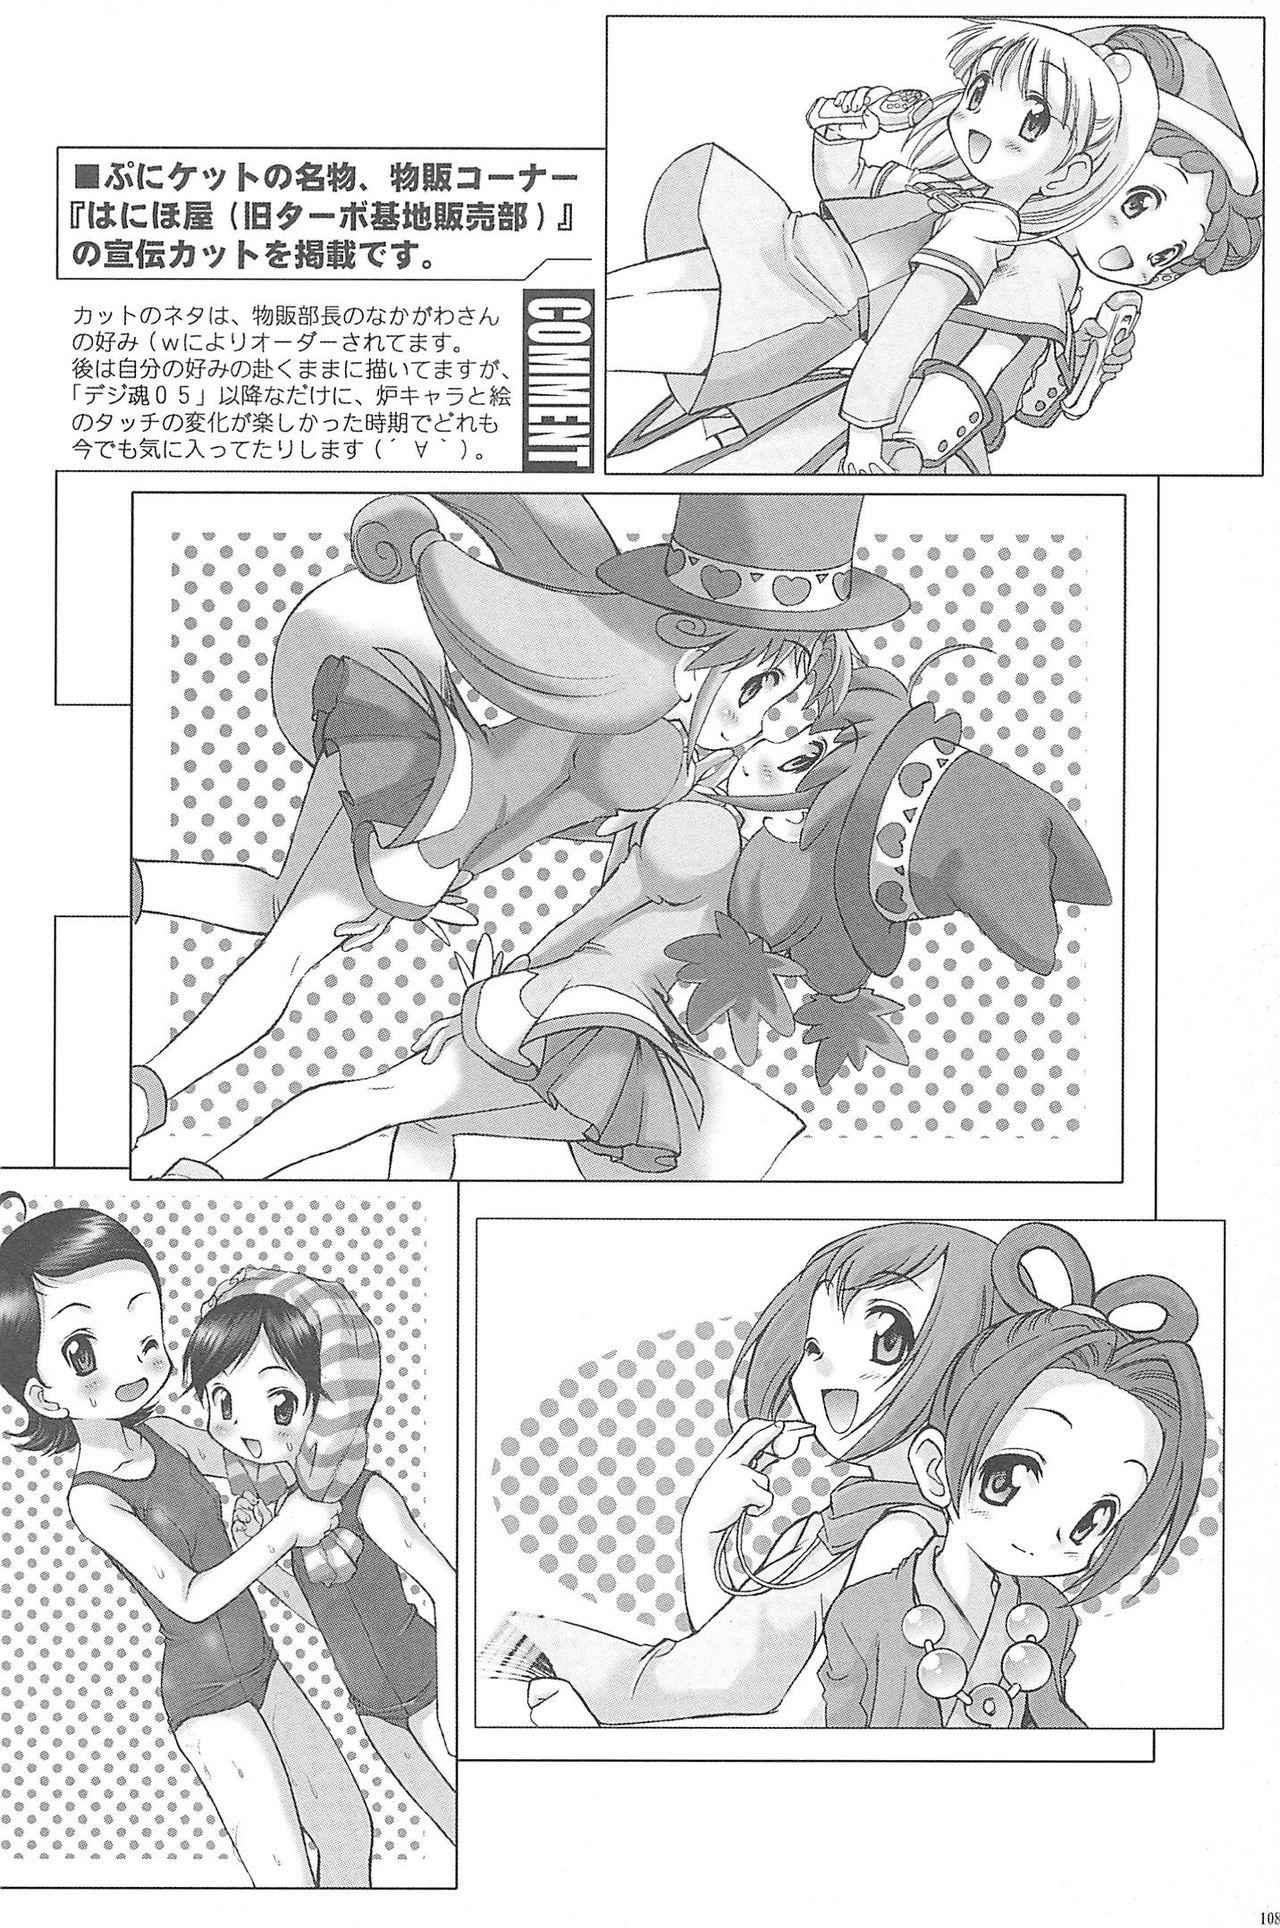 Ariake International X-rated Manga Festival Mercy Rabbit SPECIAL 109